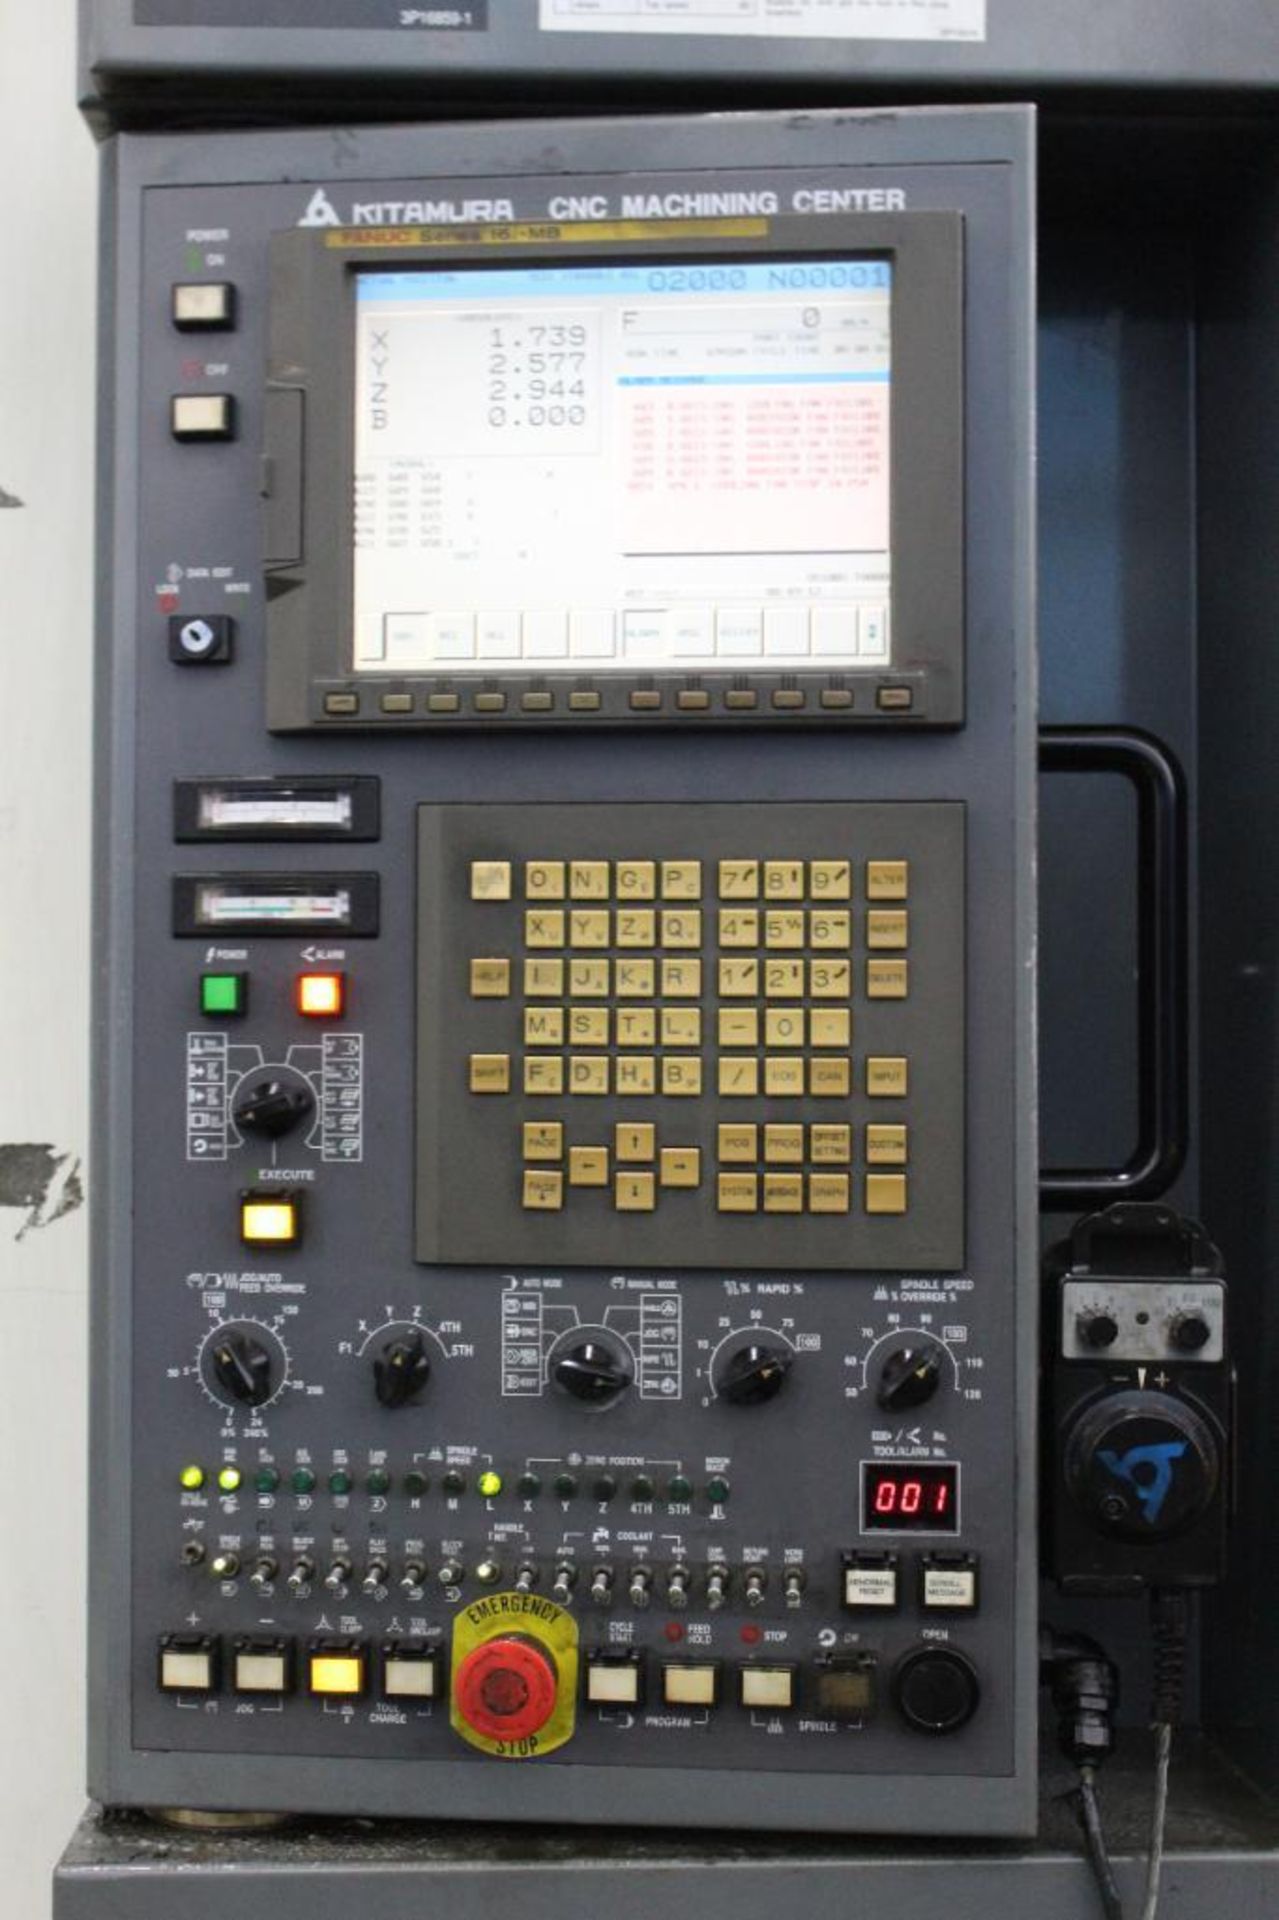 2004 Kitamura MyCenter HX500i Horizontal Machining Center with Fanuc Series 16i-MB Controller - Image 54 of 62